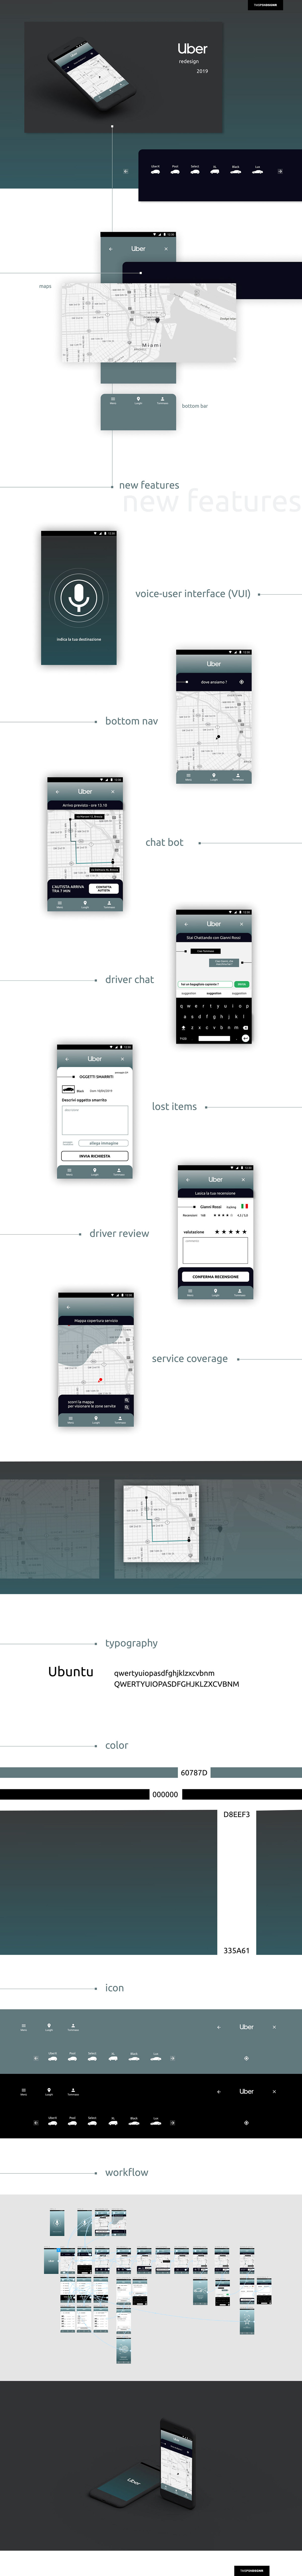 Uber redesign ux UI app